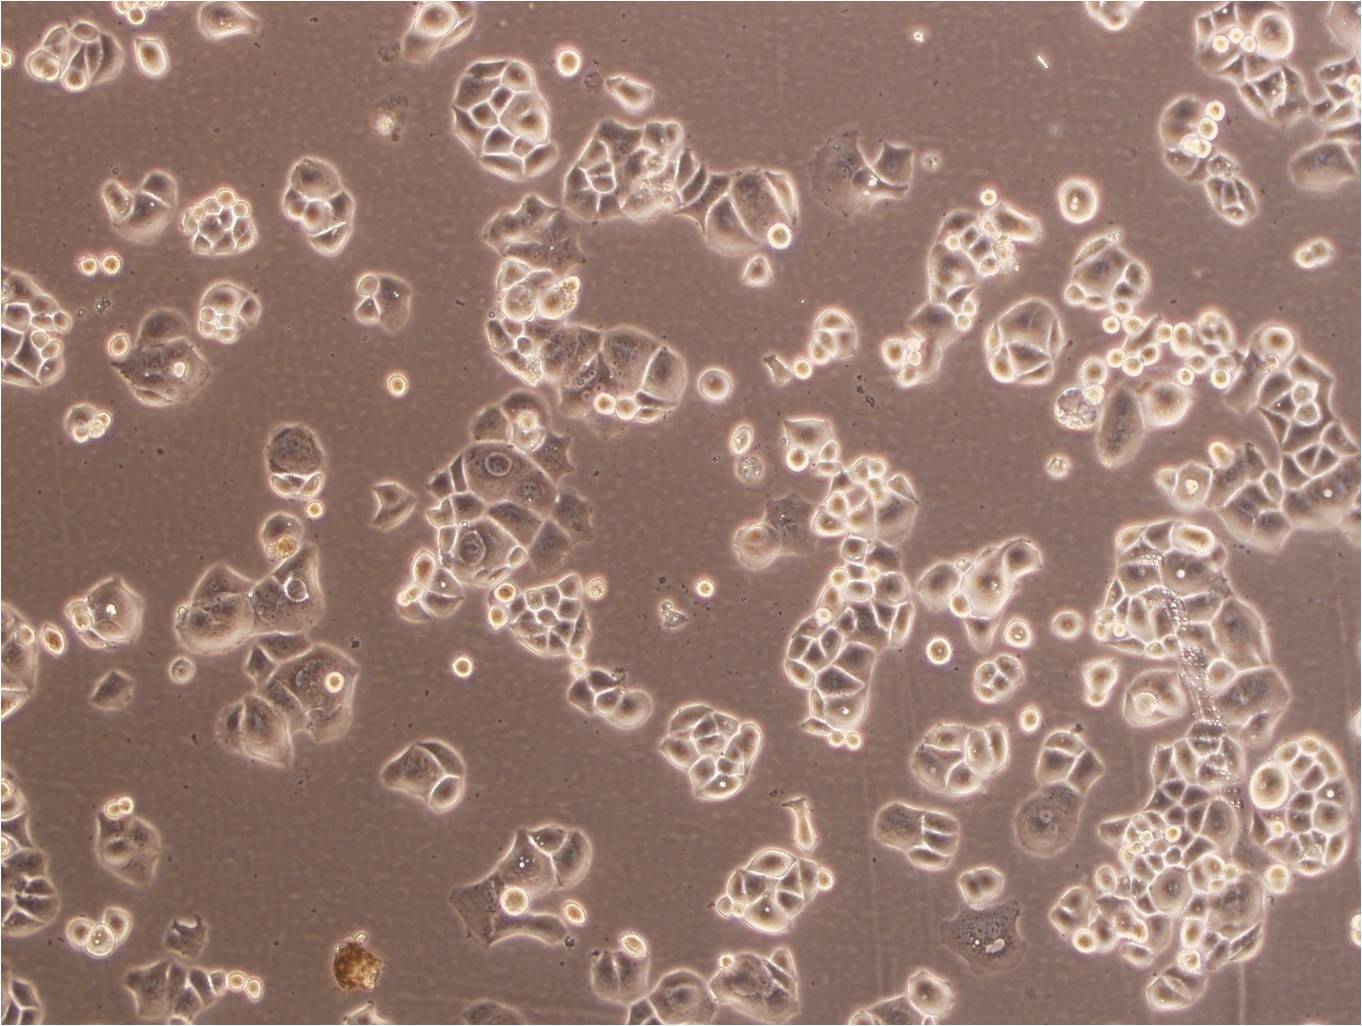 C3H/10T1/2 clone 8 Cells|小鼠胚胎成纤维可传代细胞系,C3H/10T1/2 clone 8 Cells